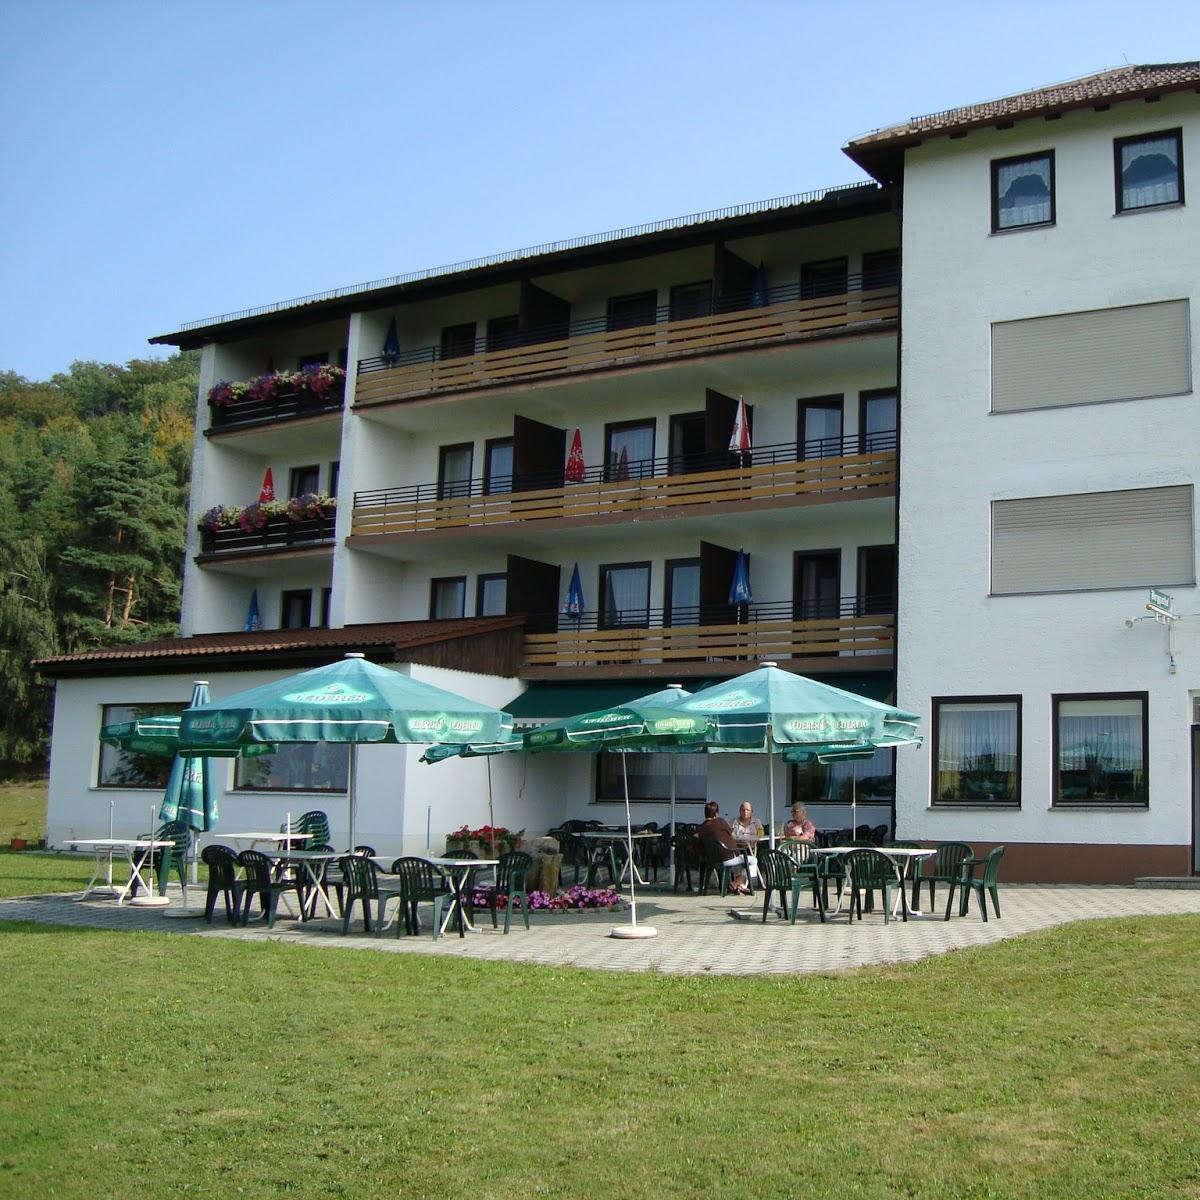 Restaurant "Hotel - Pension König Warberg" in Neunburg vorm Wald